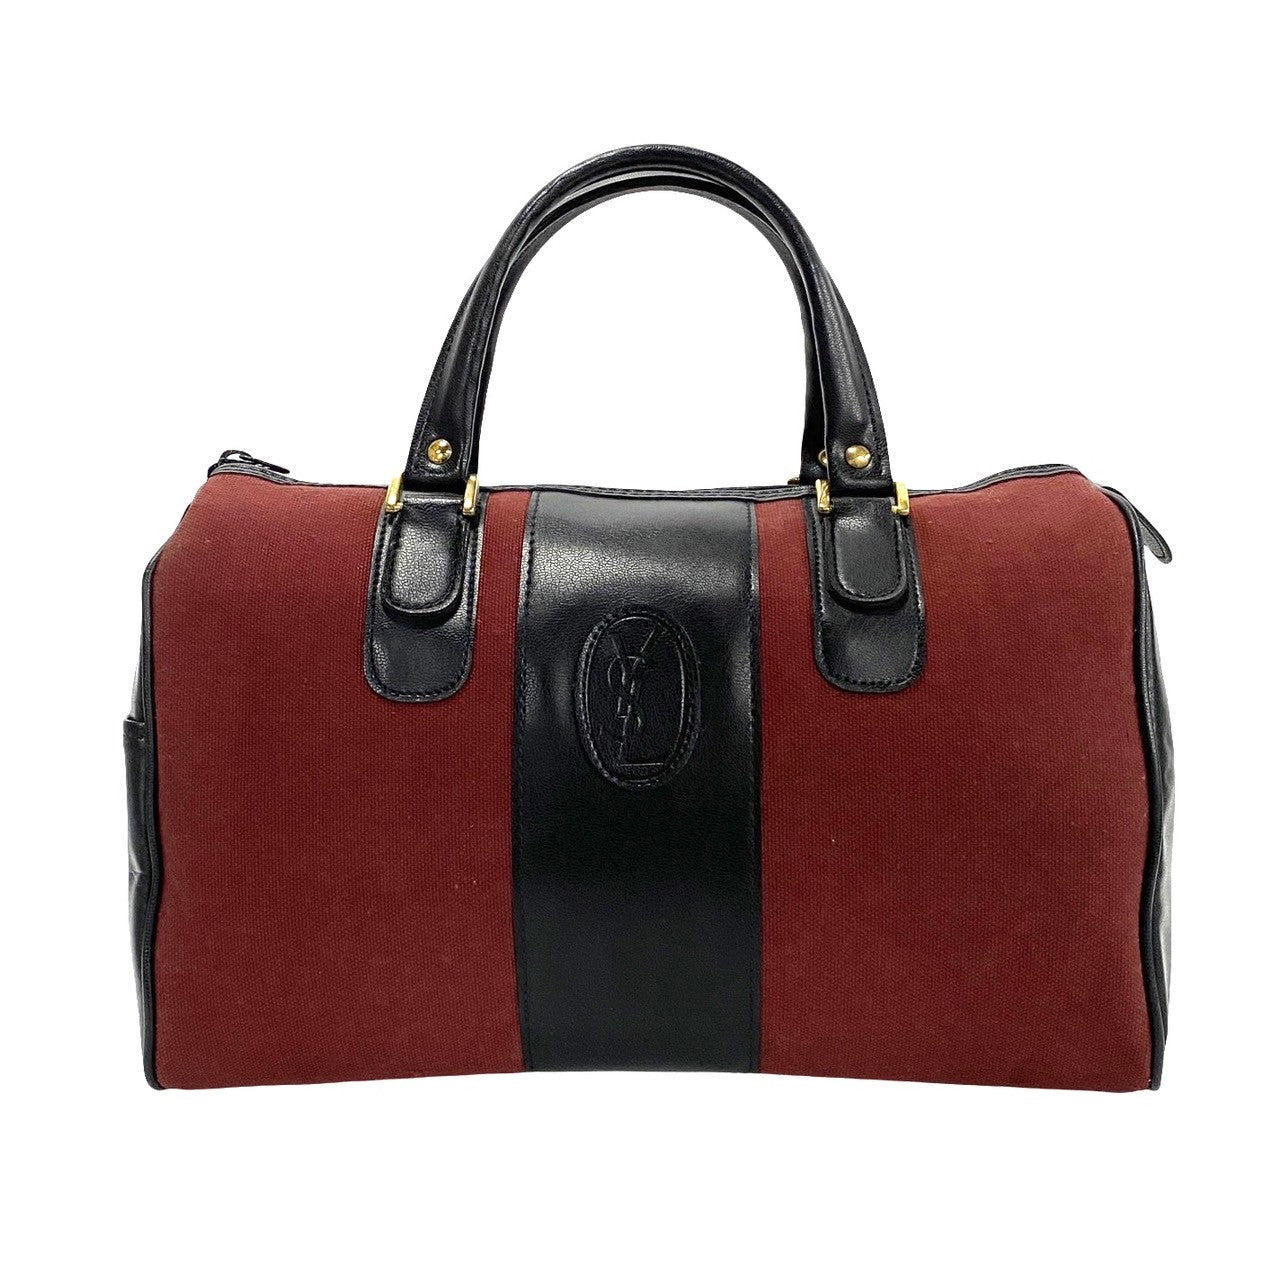 Yves Saint Laurent Canvas & Leather Mini Boston Bag Canvas Handbag in Good condition